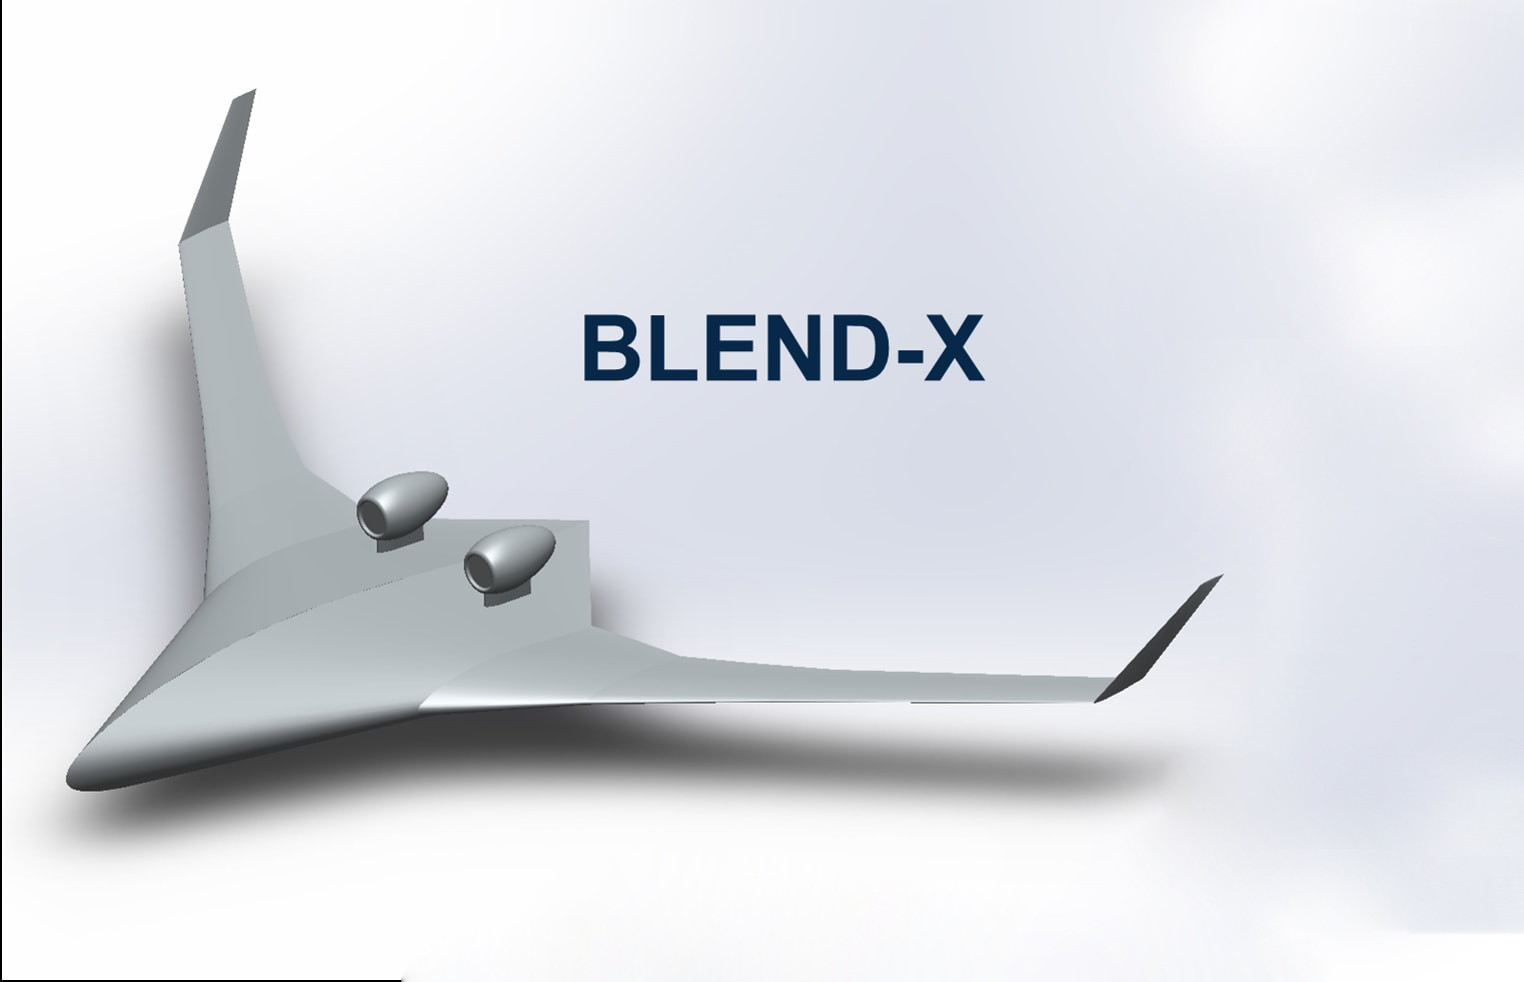 Artist illustration of the Blend-X aircraft.